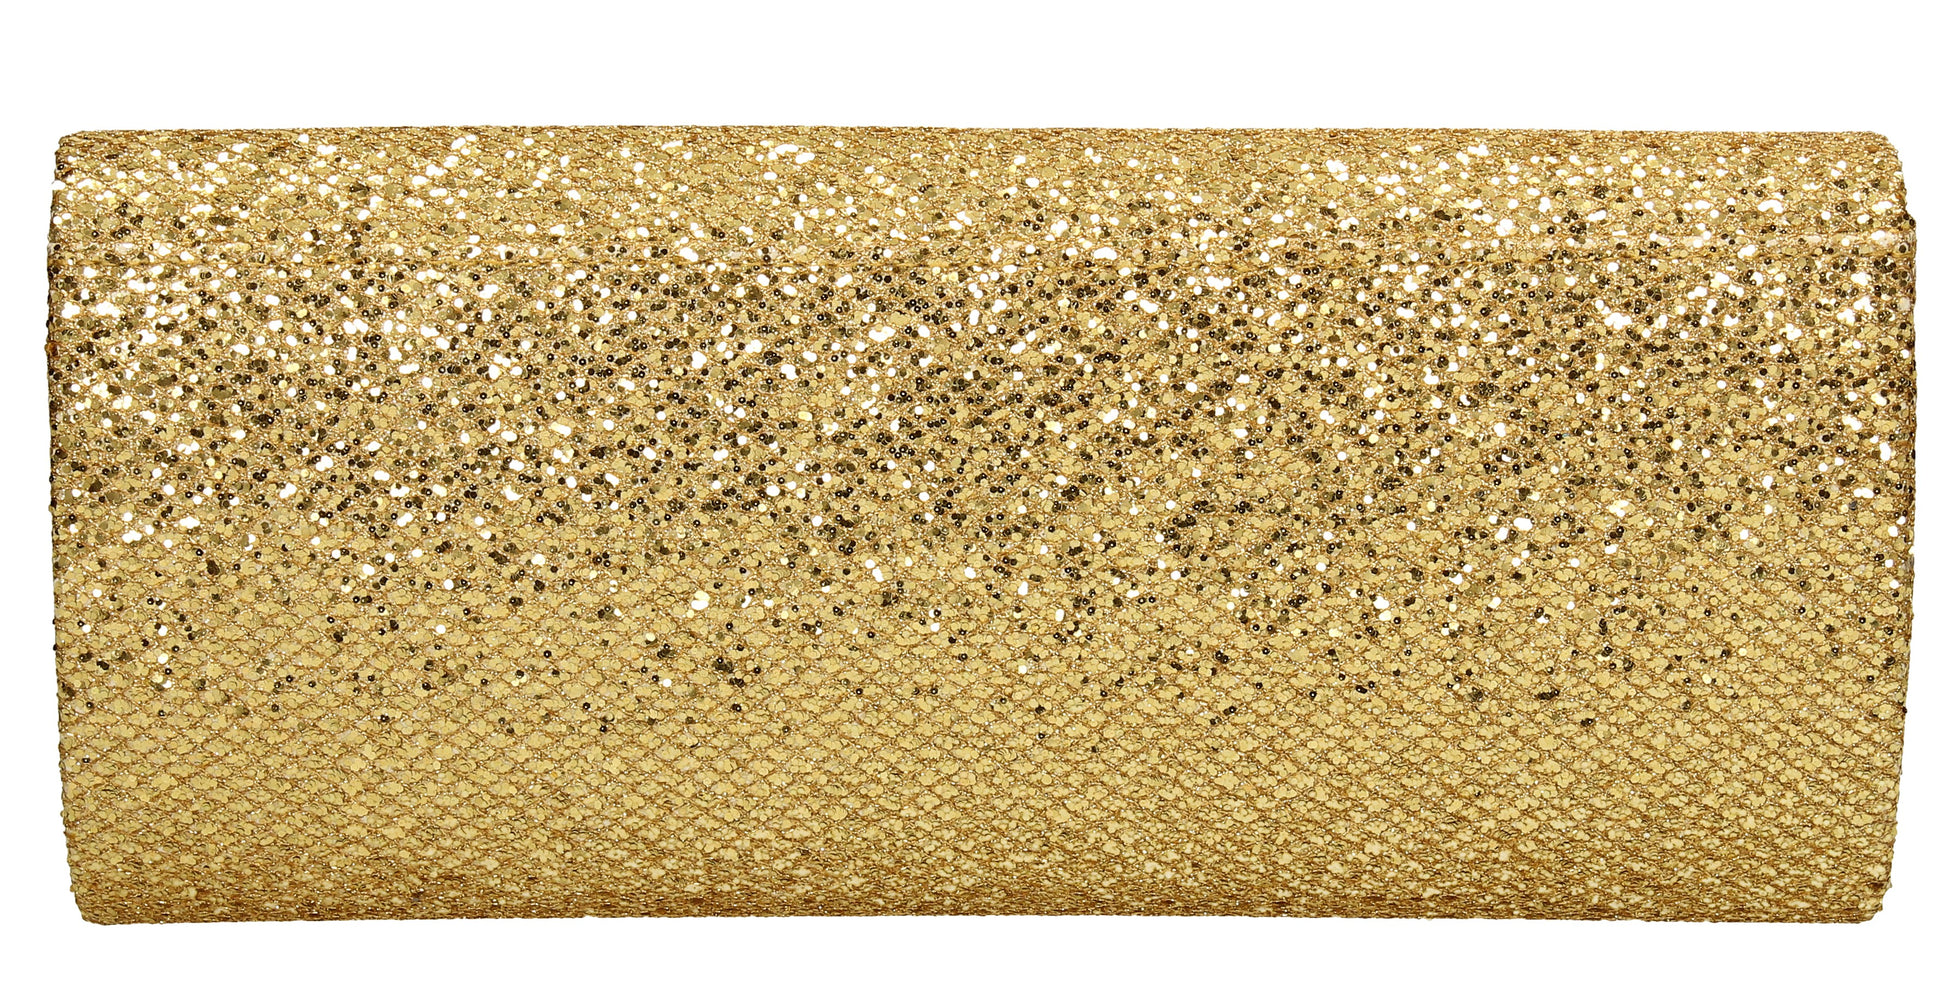 SWANKYSWANS Giselle Glitter Clutch Bag Gold Cute Cheap Clutch Bag For Weddings School and Work